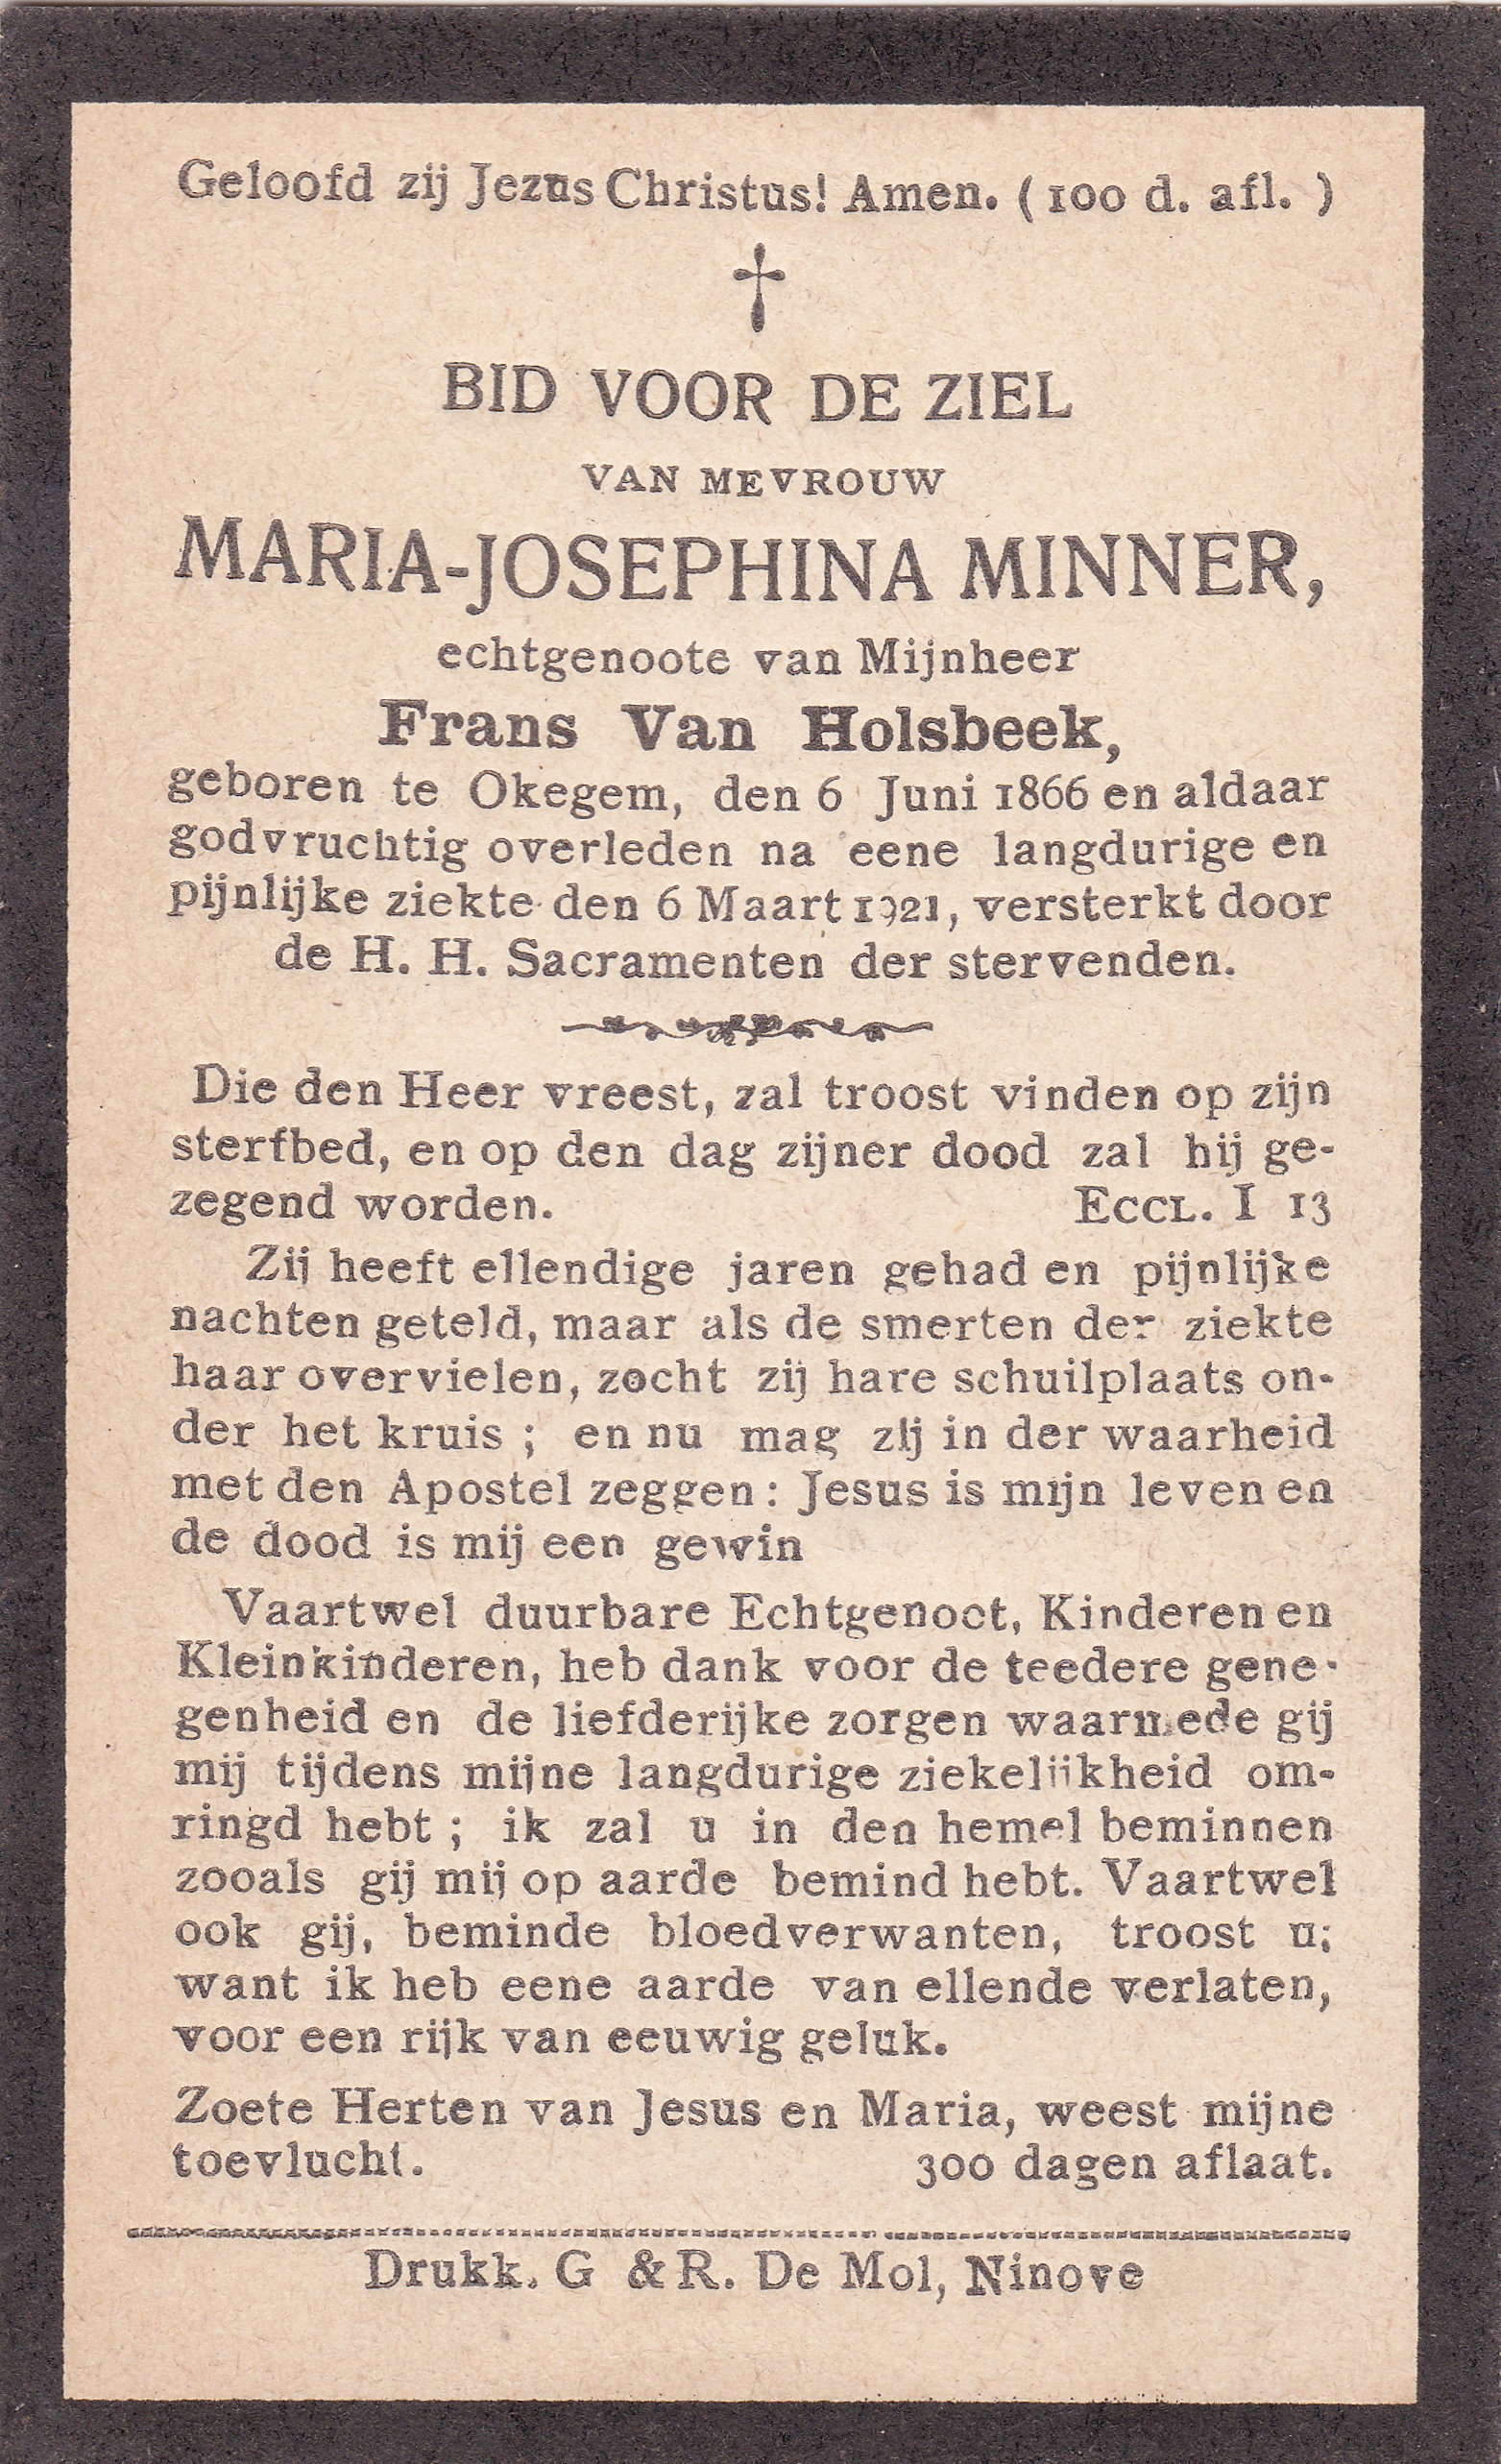 Minner Maria Josephina